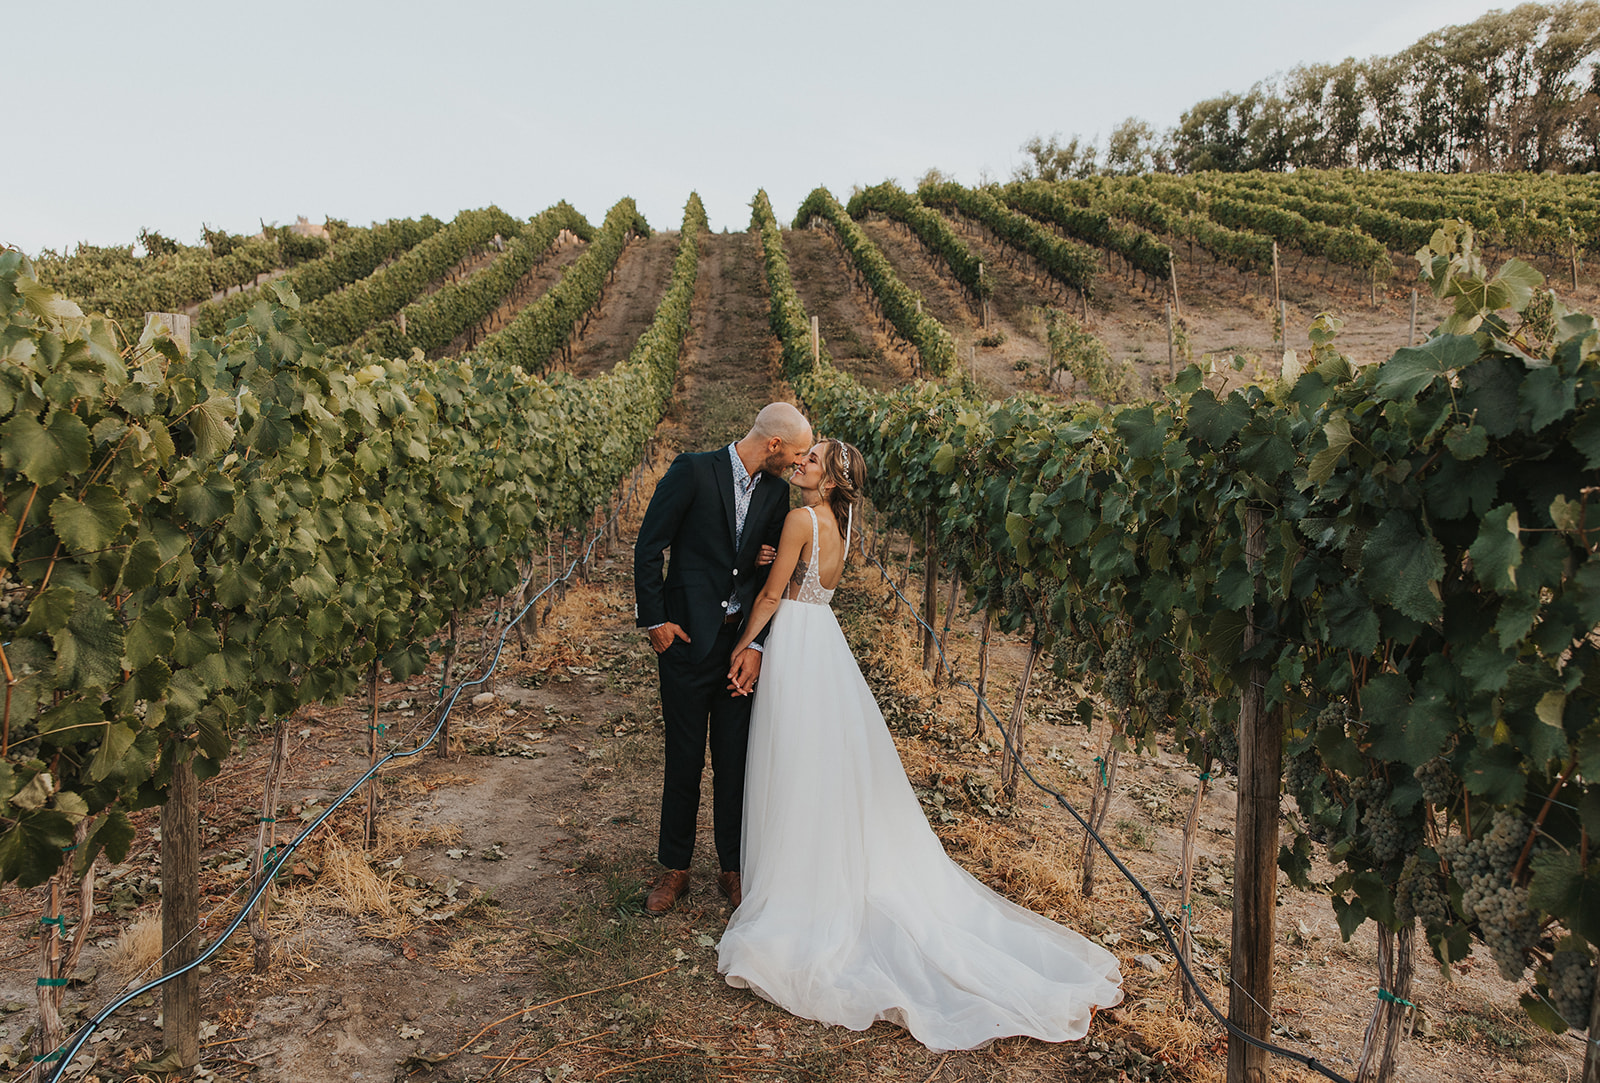 Romantic Siren Song winery wedding day